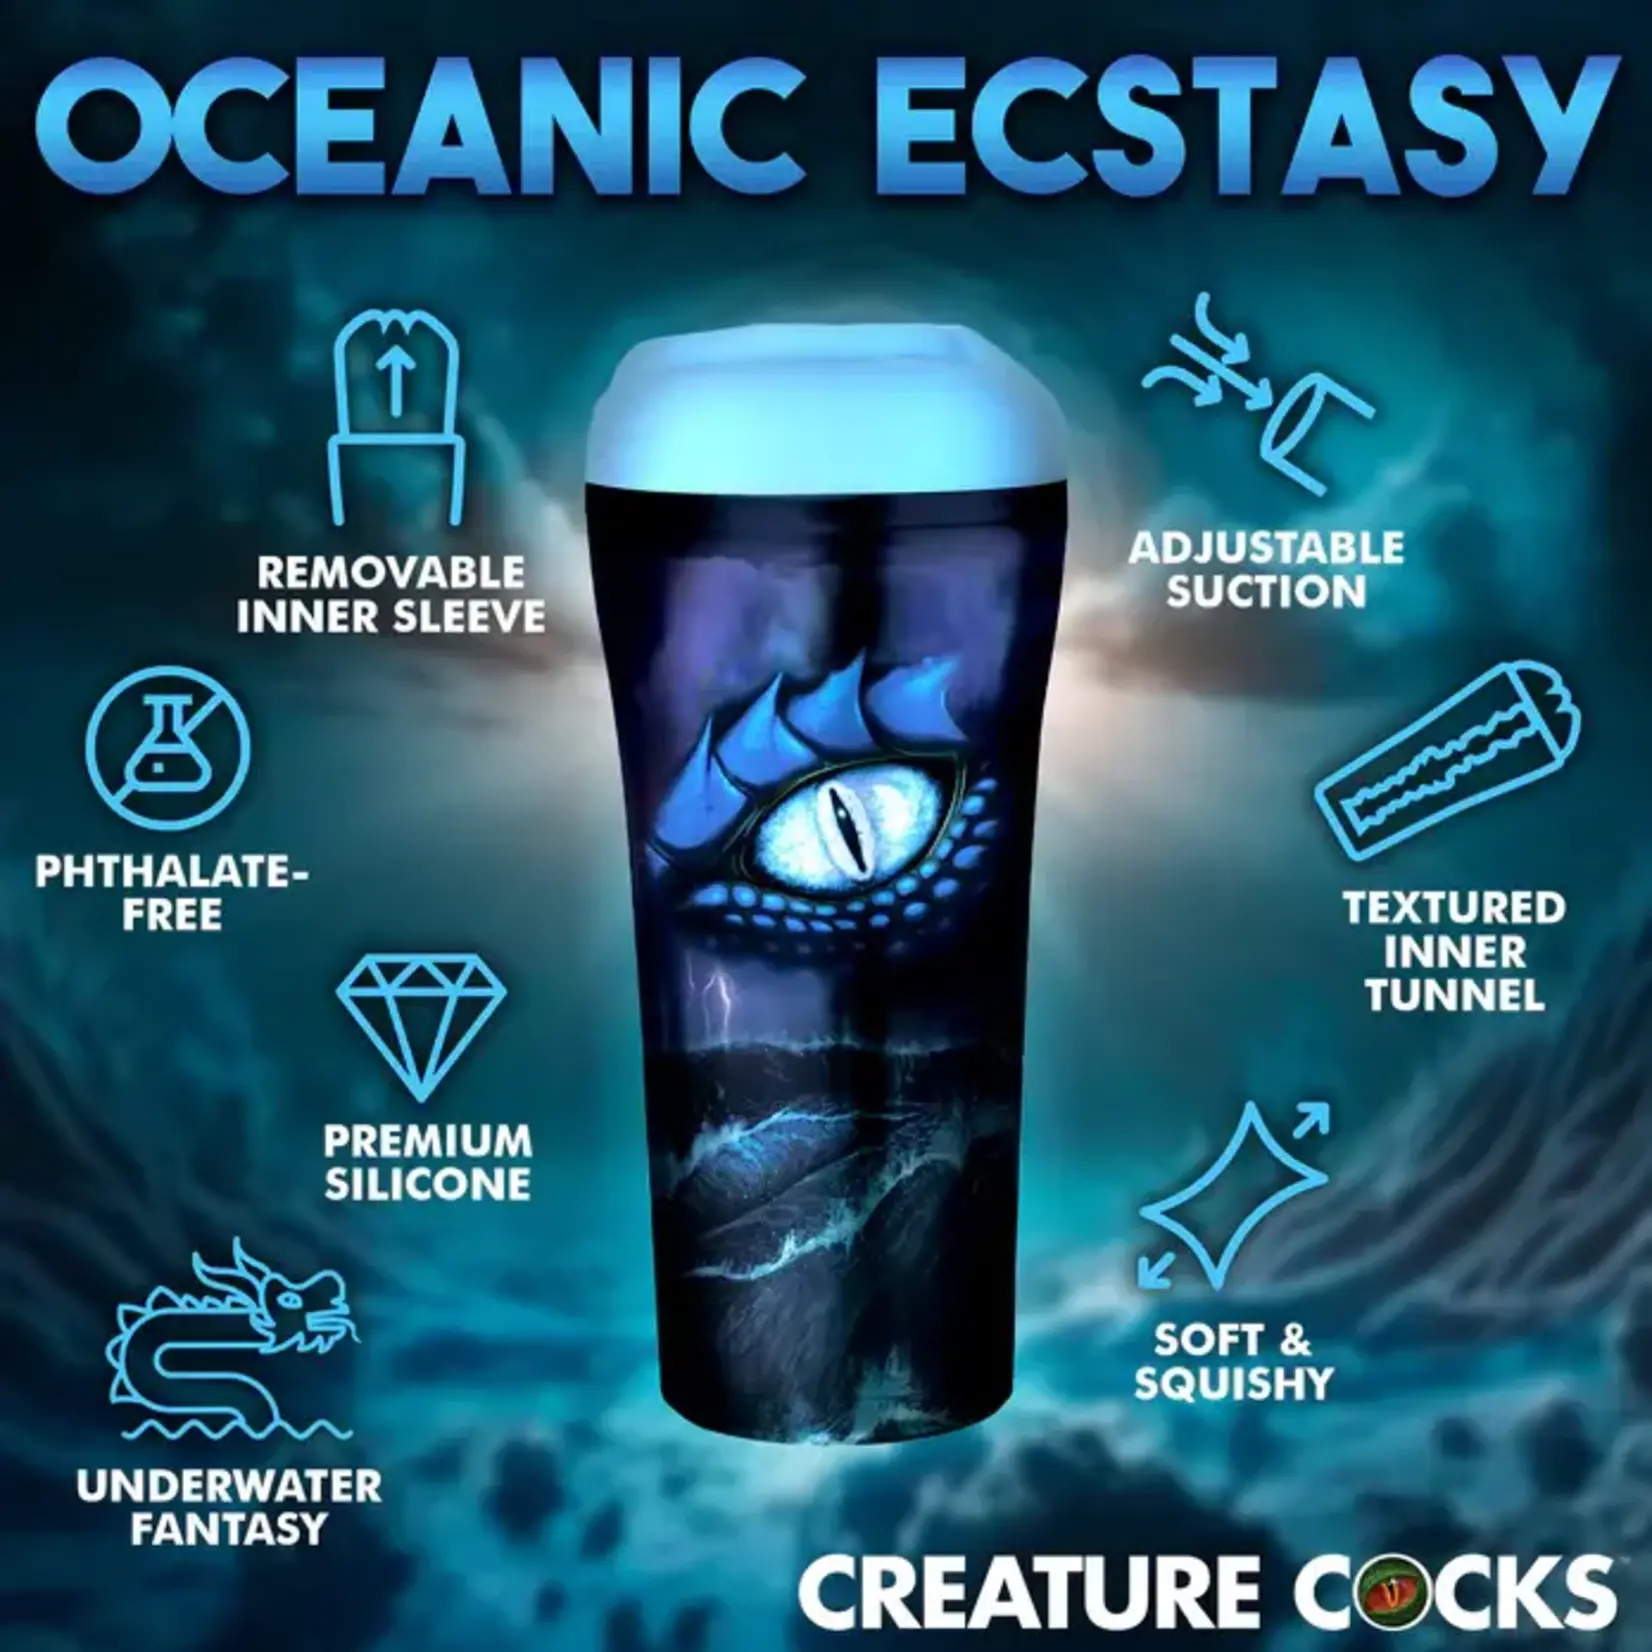 Creature Cocks Pussidon Sea Monster Stroker - Blue/Black